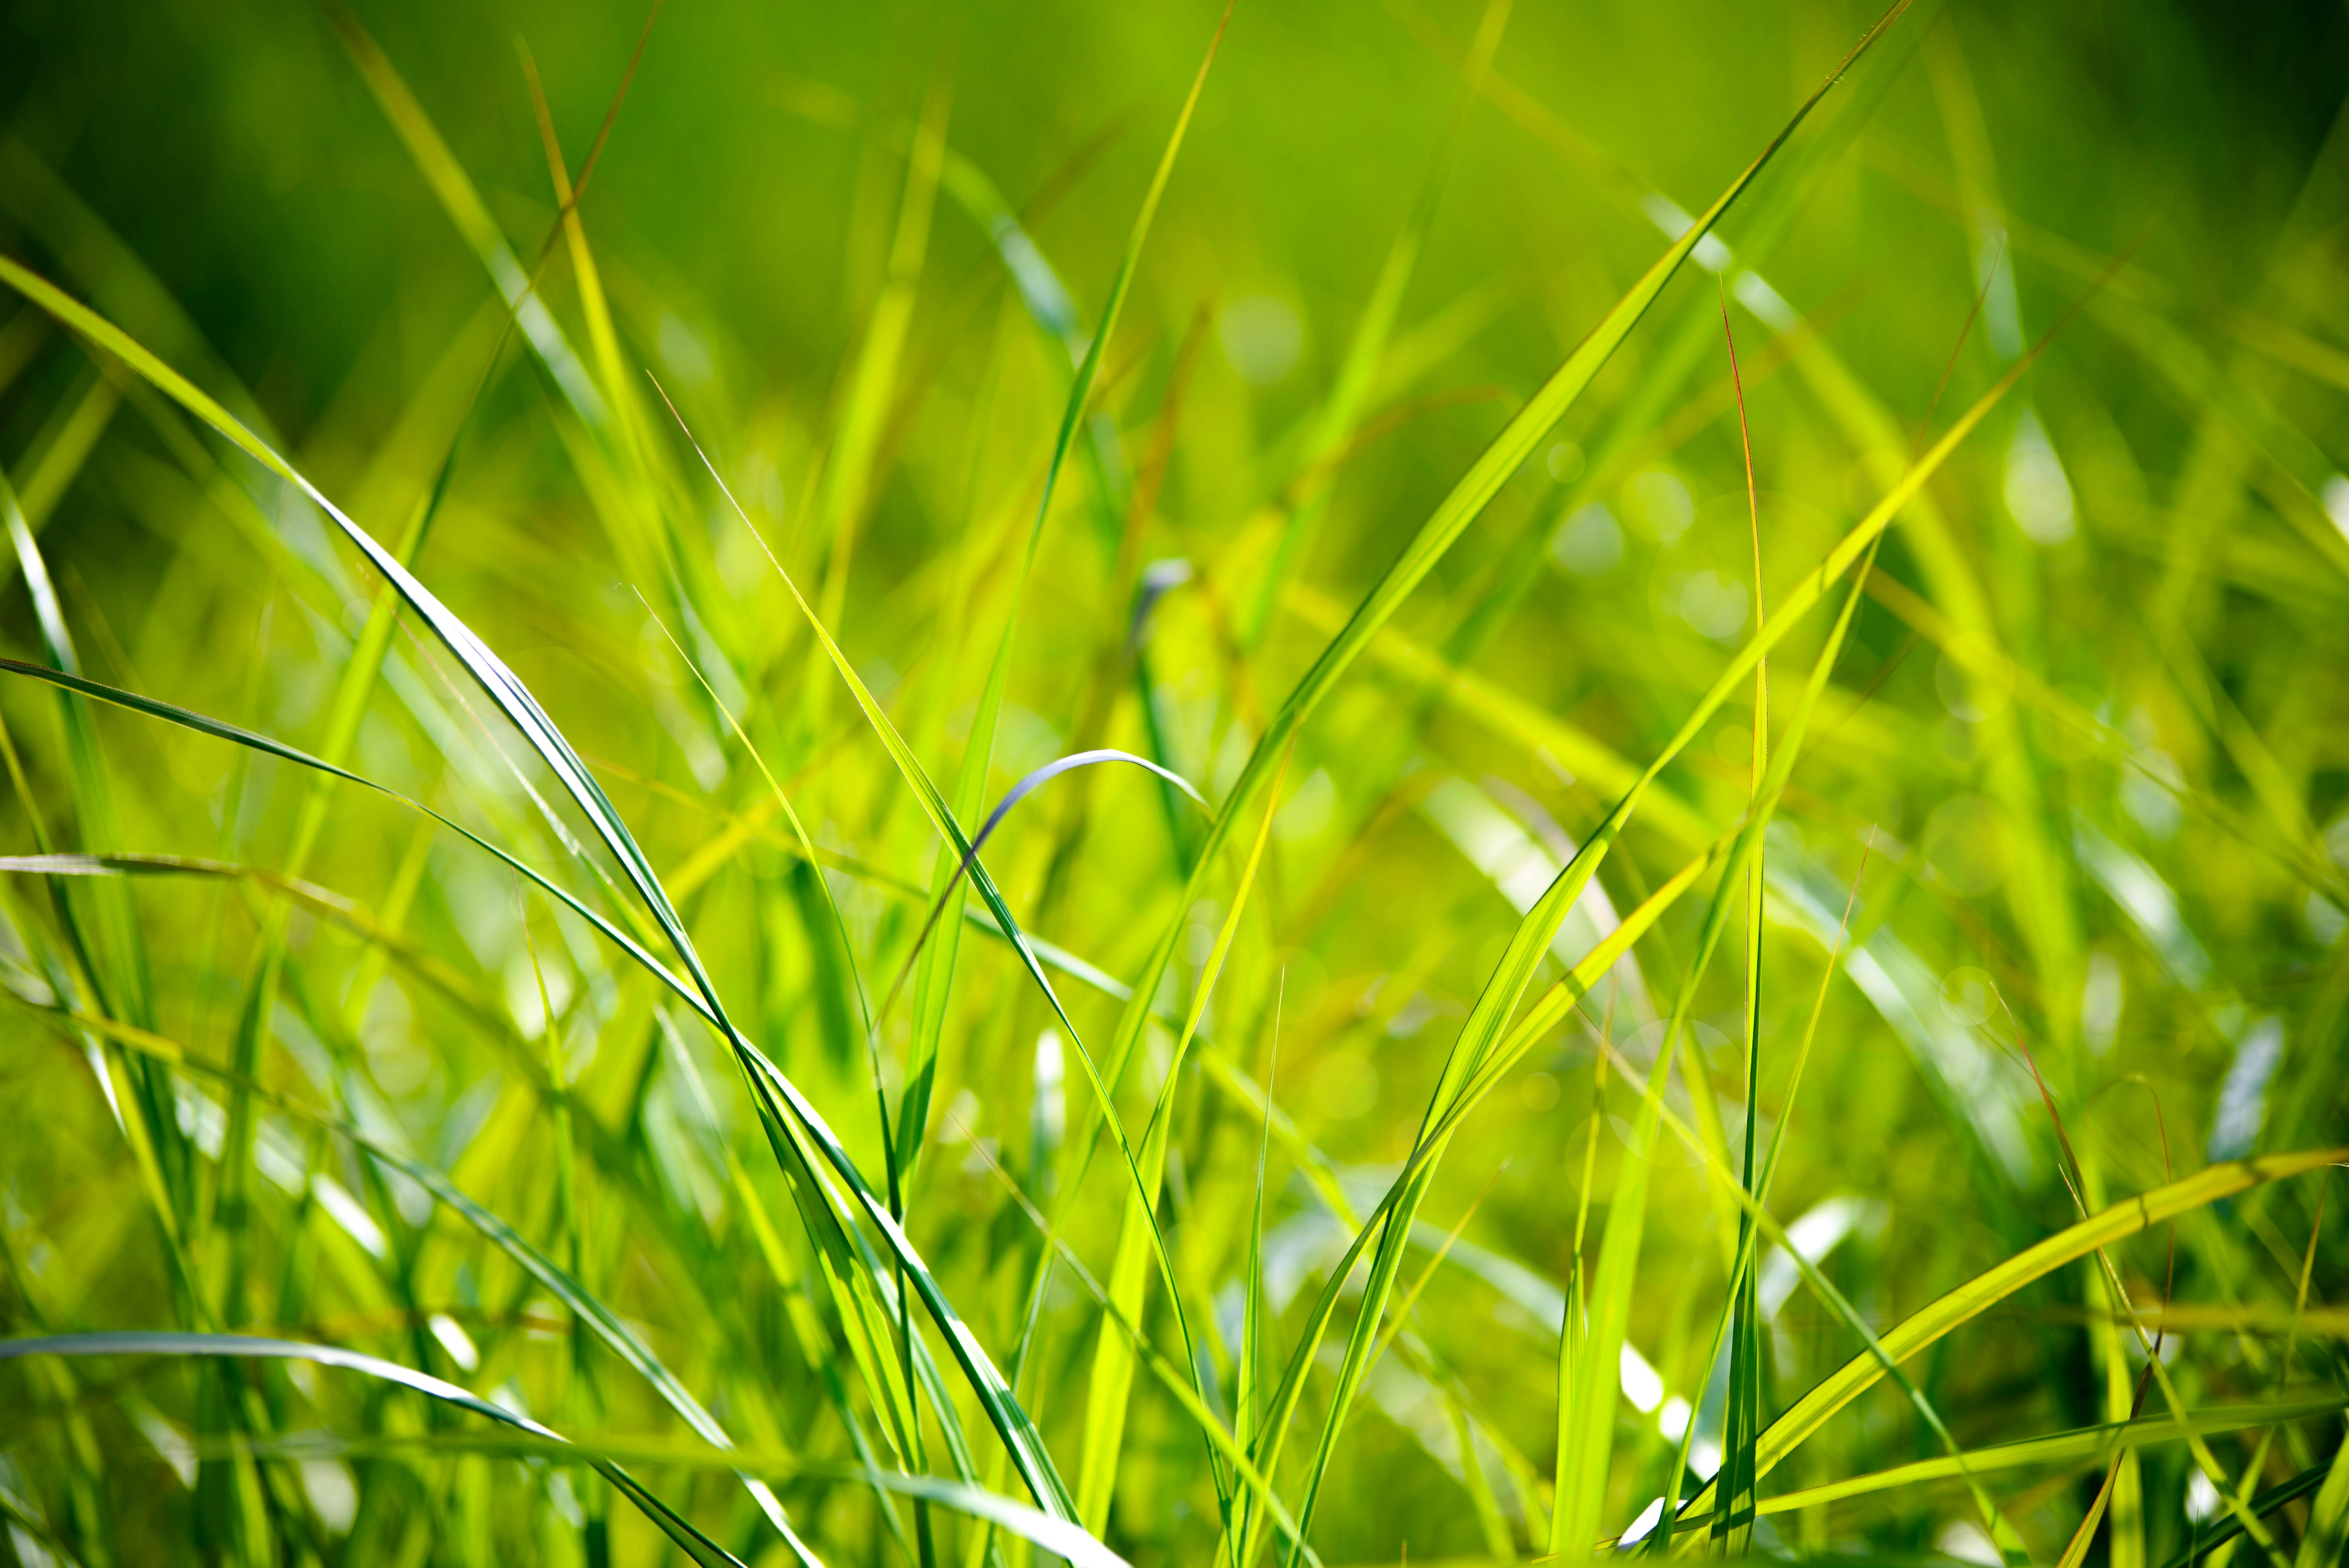 Green Grass · Free Stock Photo